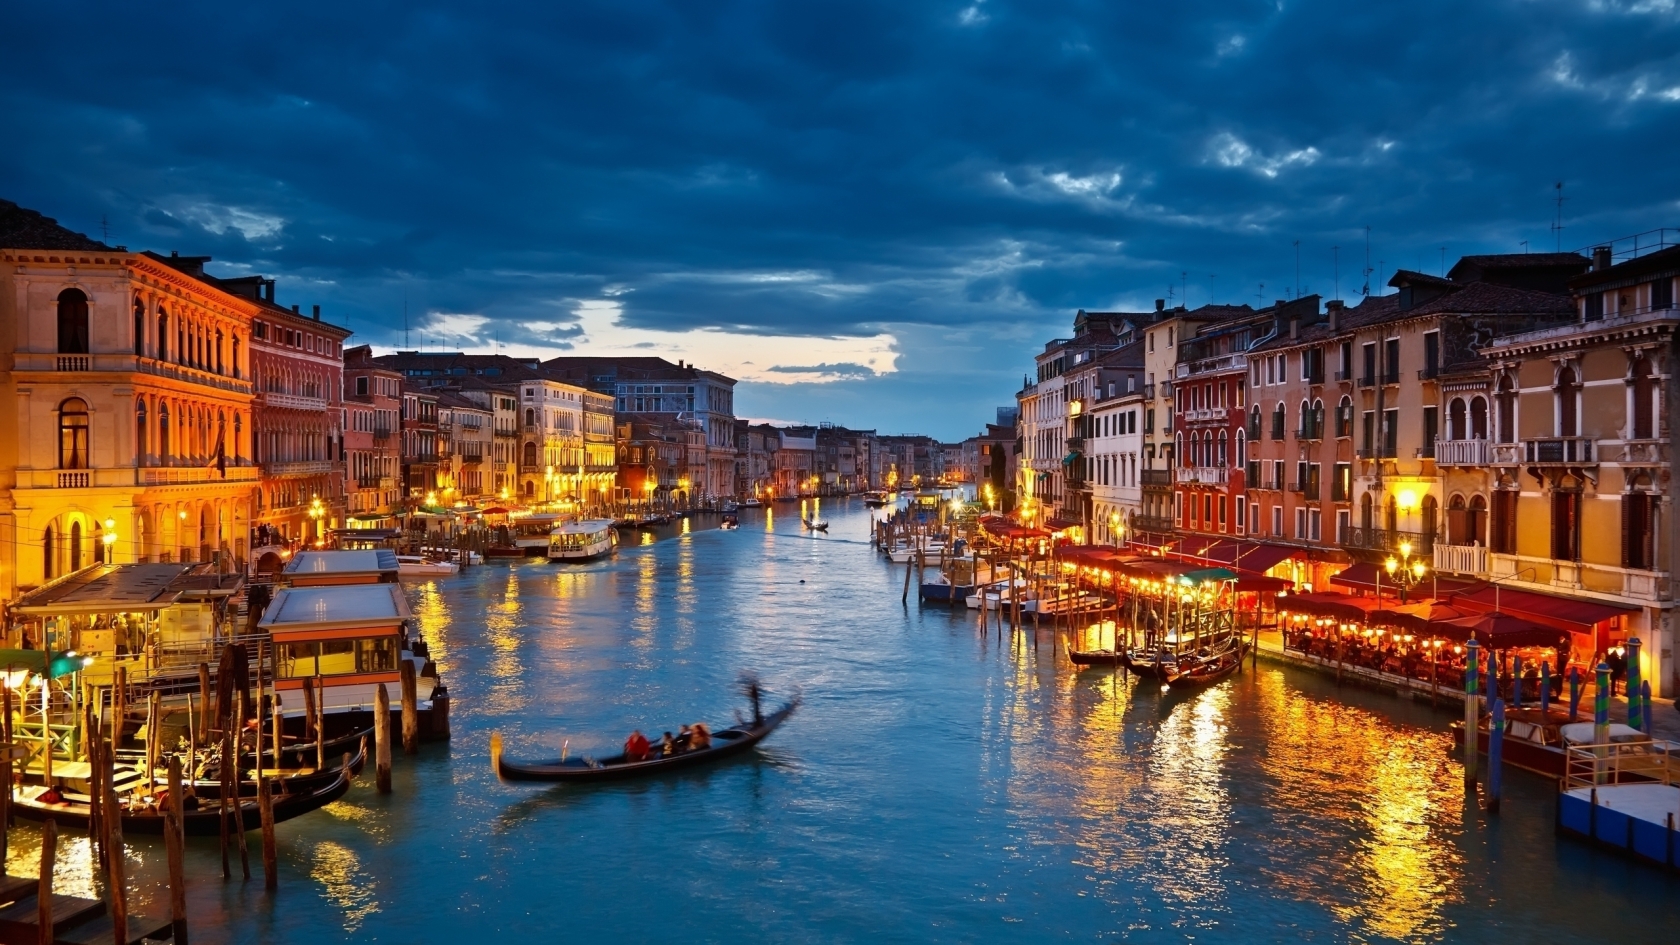 Night in Venice for 1680 x 945 HDTV resolution